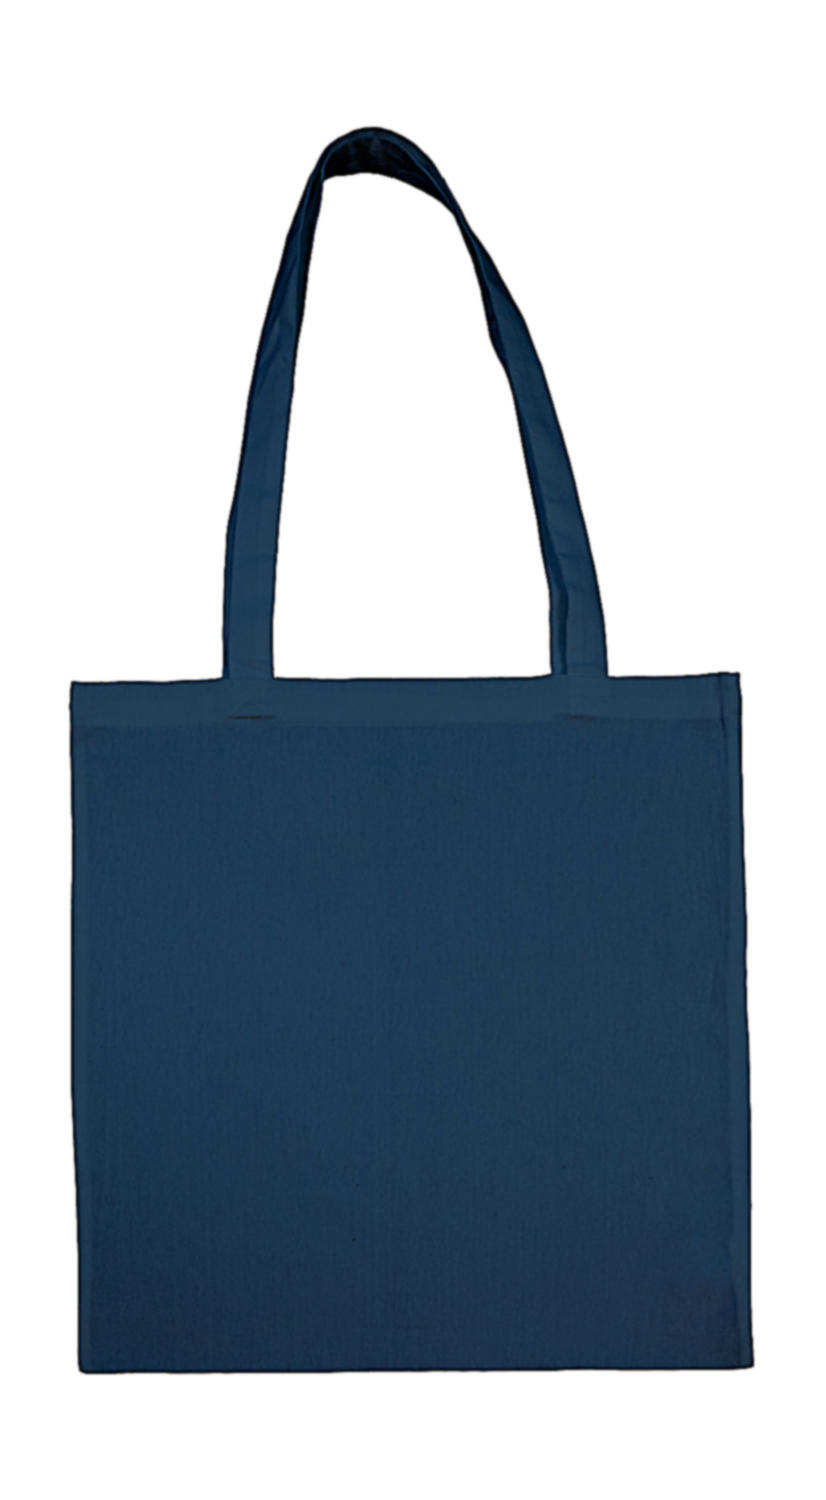  Cotton Bag LH in Farbe Indigo Blue